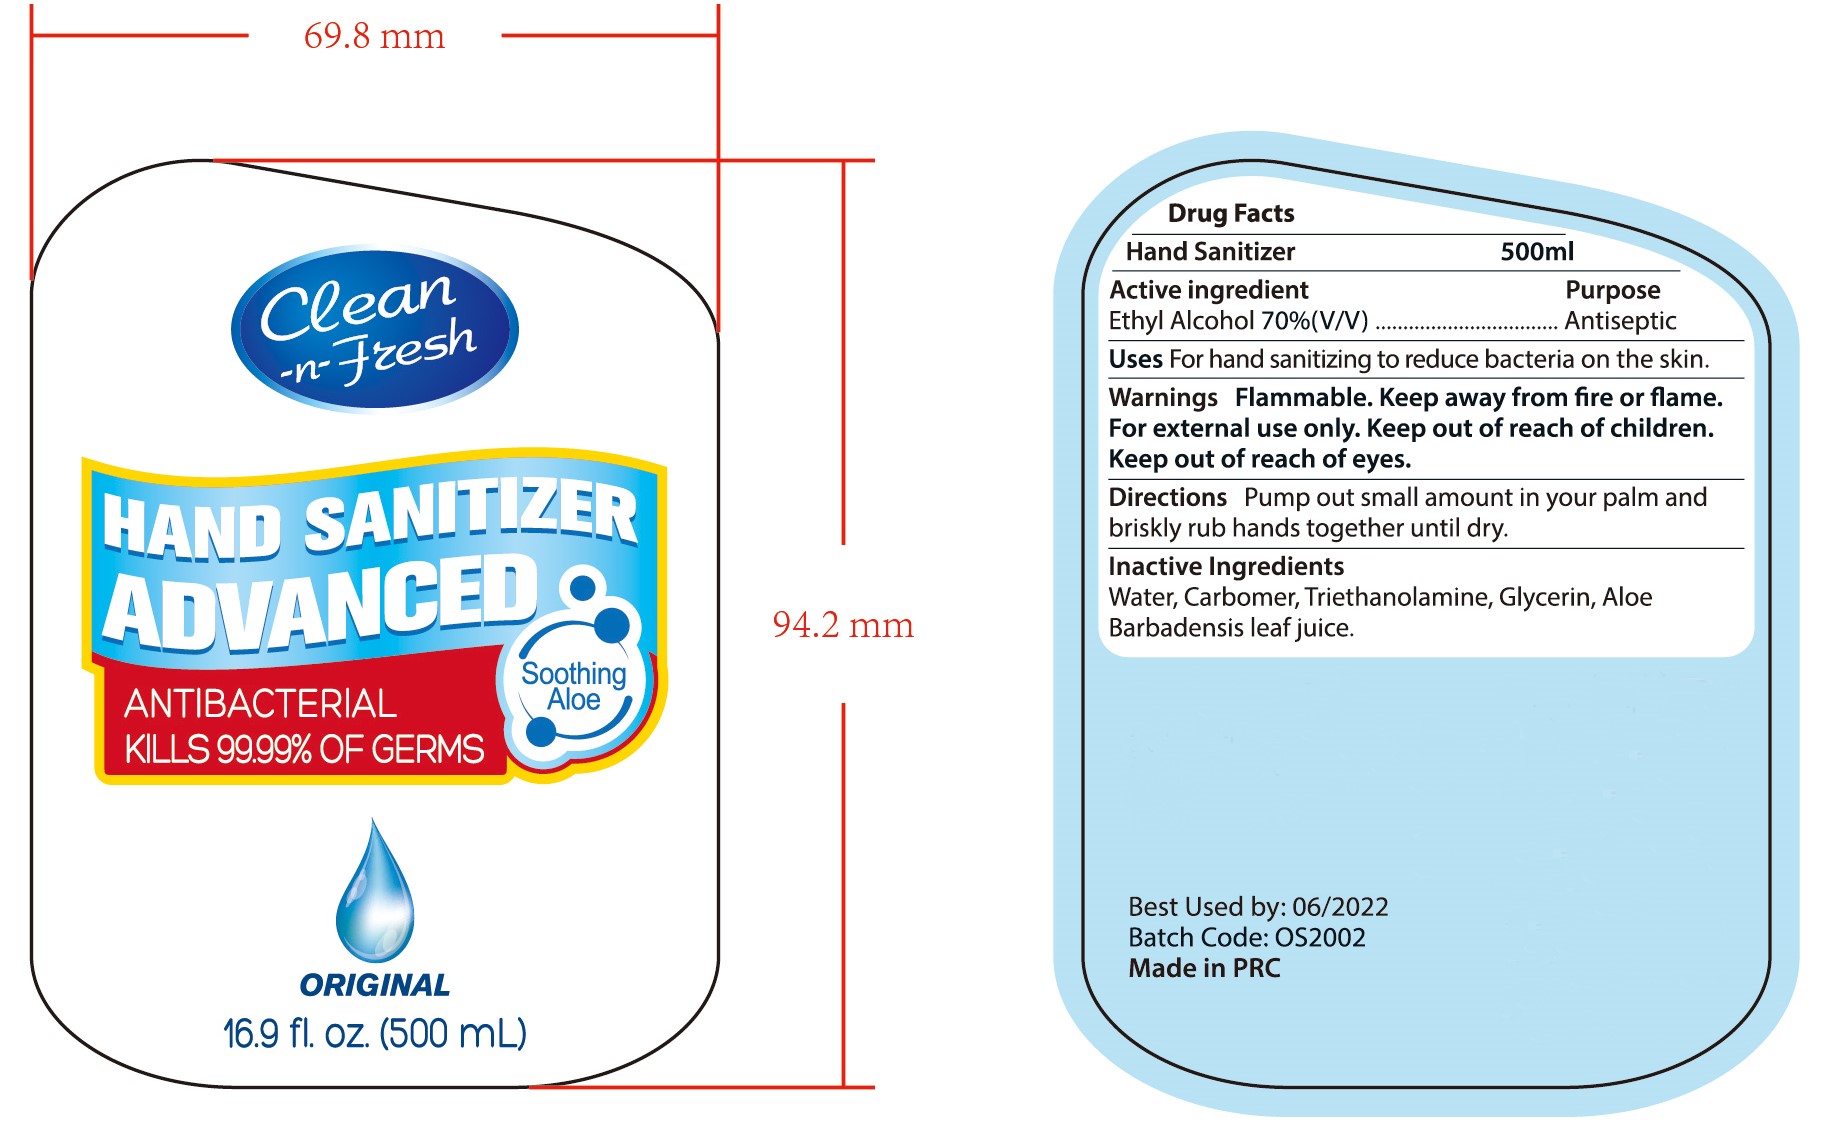 image of hand sanitizer 500ml